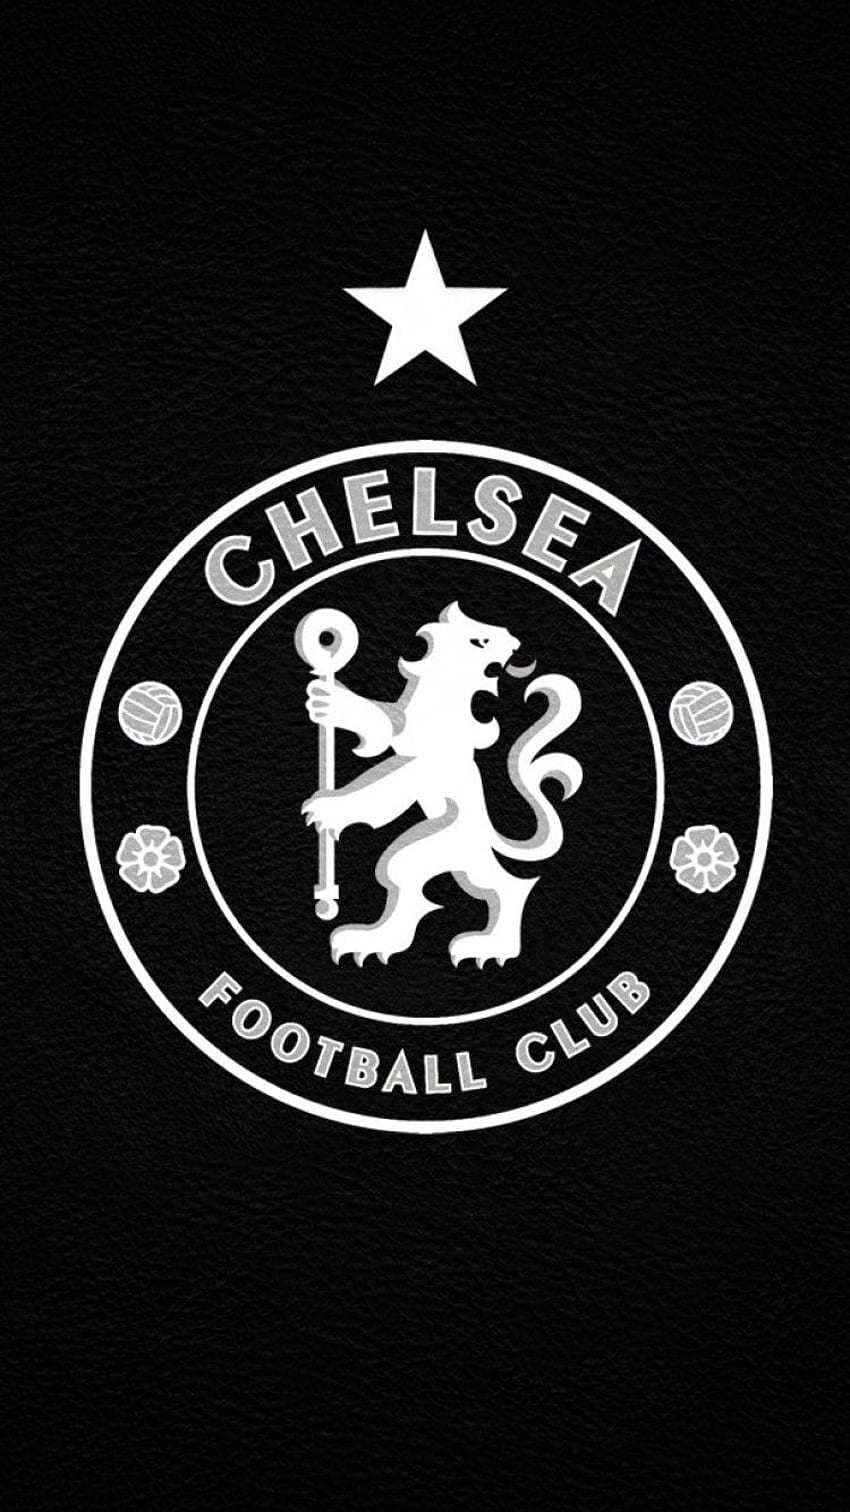 Chelsea FC 202122 home kit 2021 chelsea fc HD phone wallpaper  Peakpx